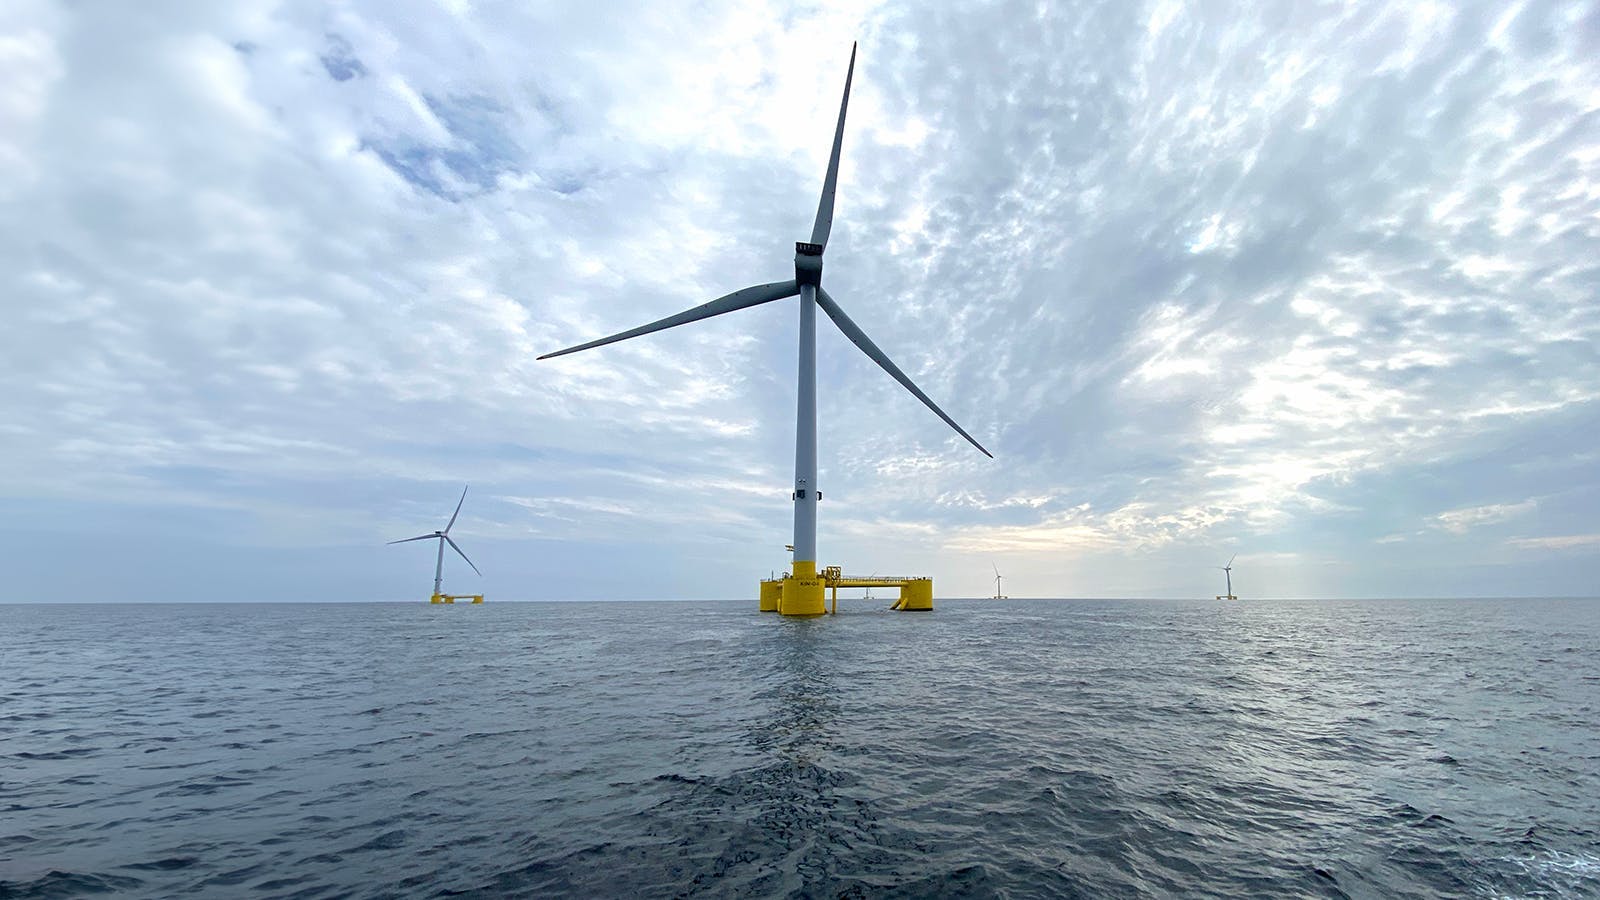 Kincardine Offshore Wind Farm in operation off the coast of Scotland